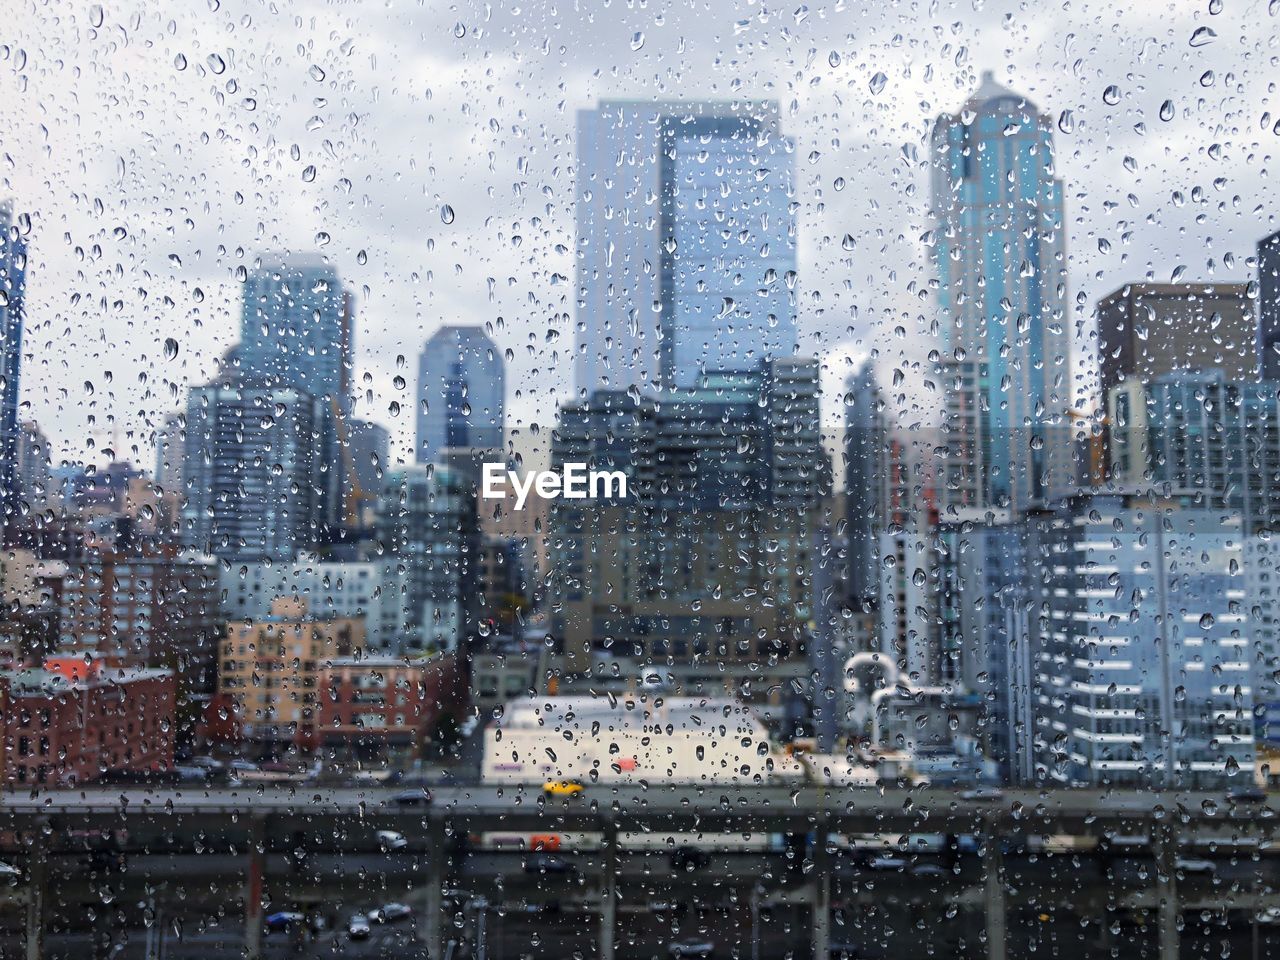 Cityscape seen through wet window during rainy season